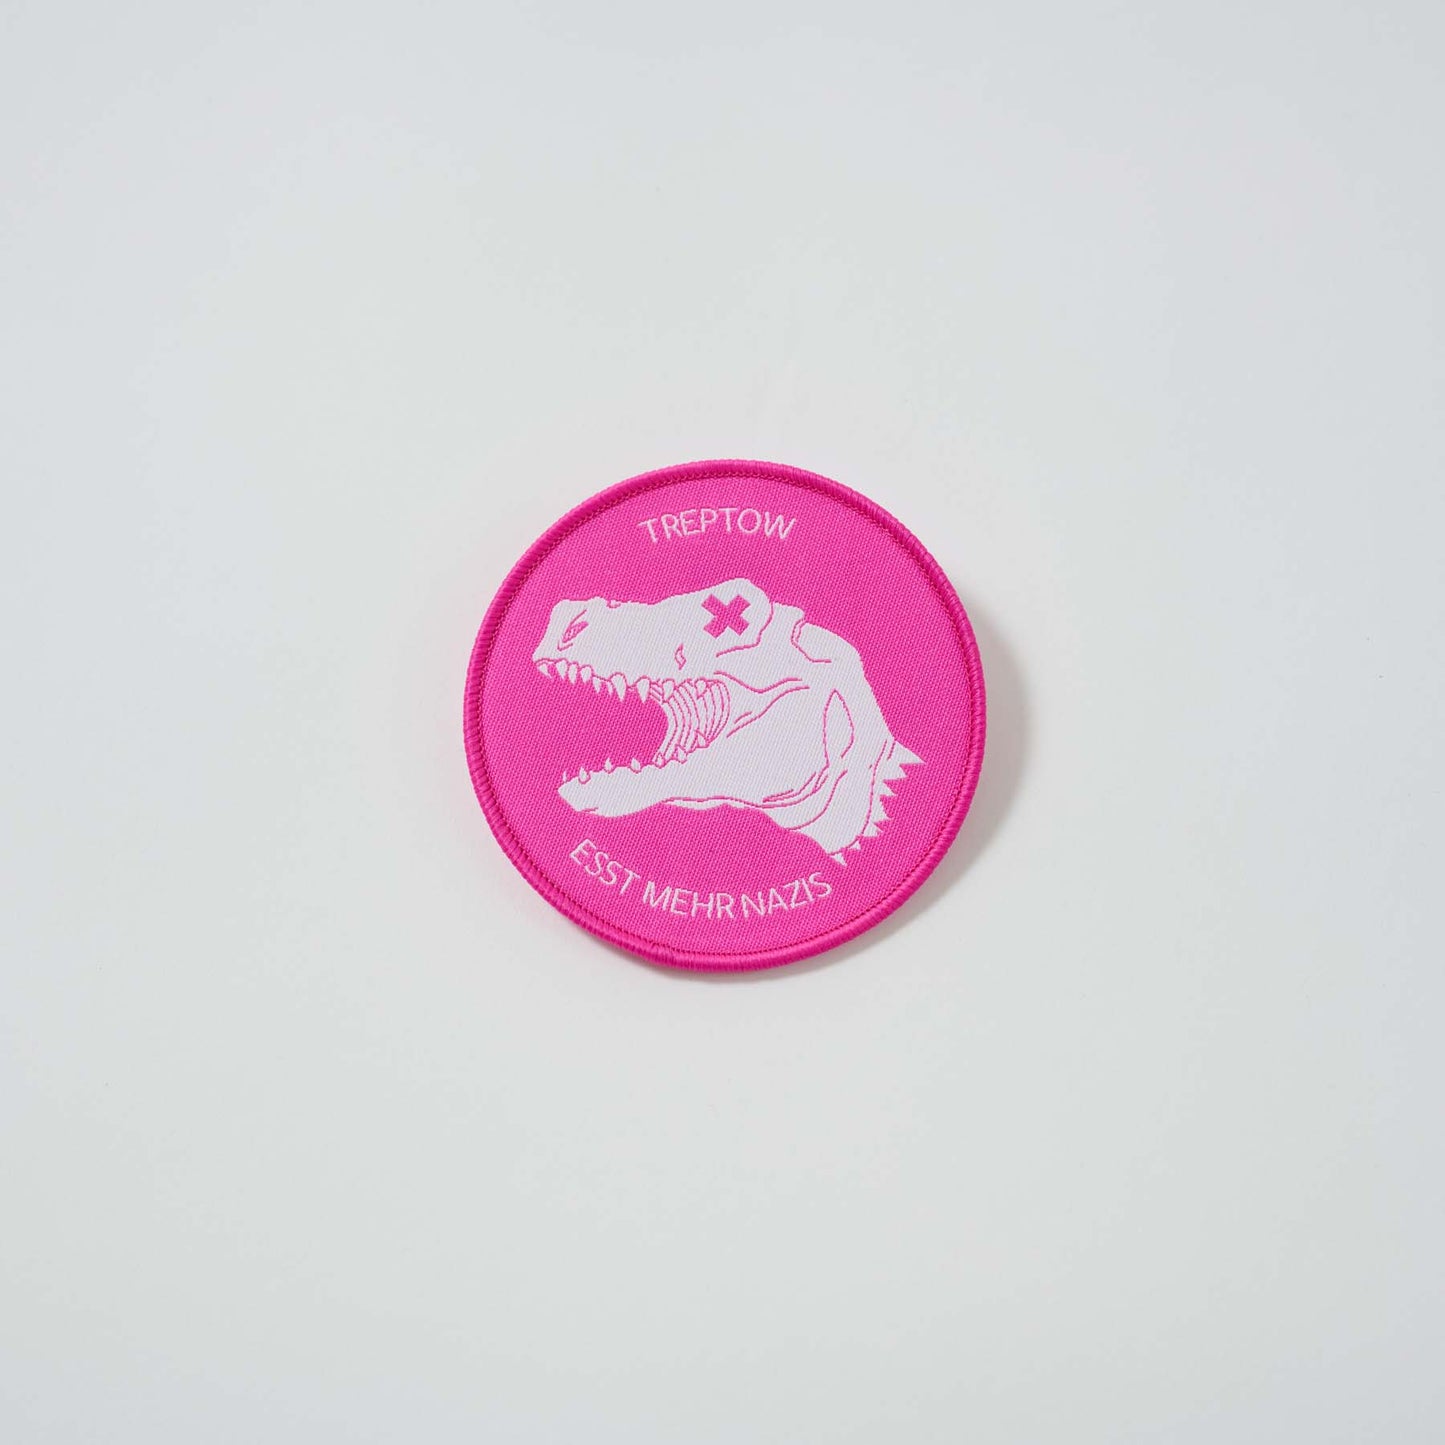 Aufnäher / Patch - Treptosaurus - pink